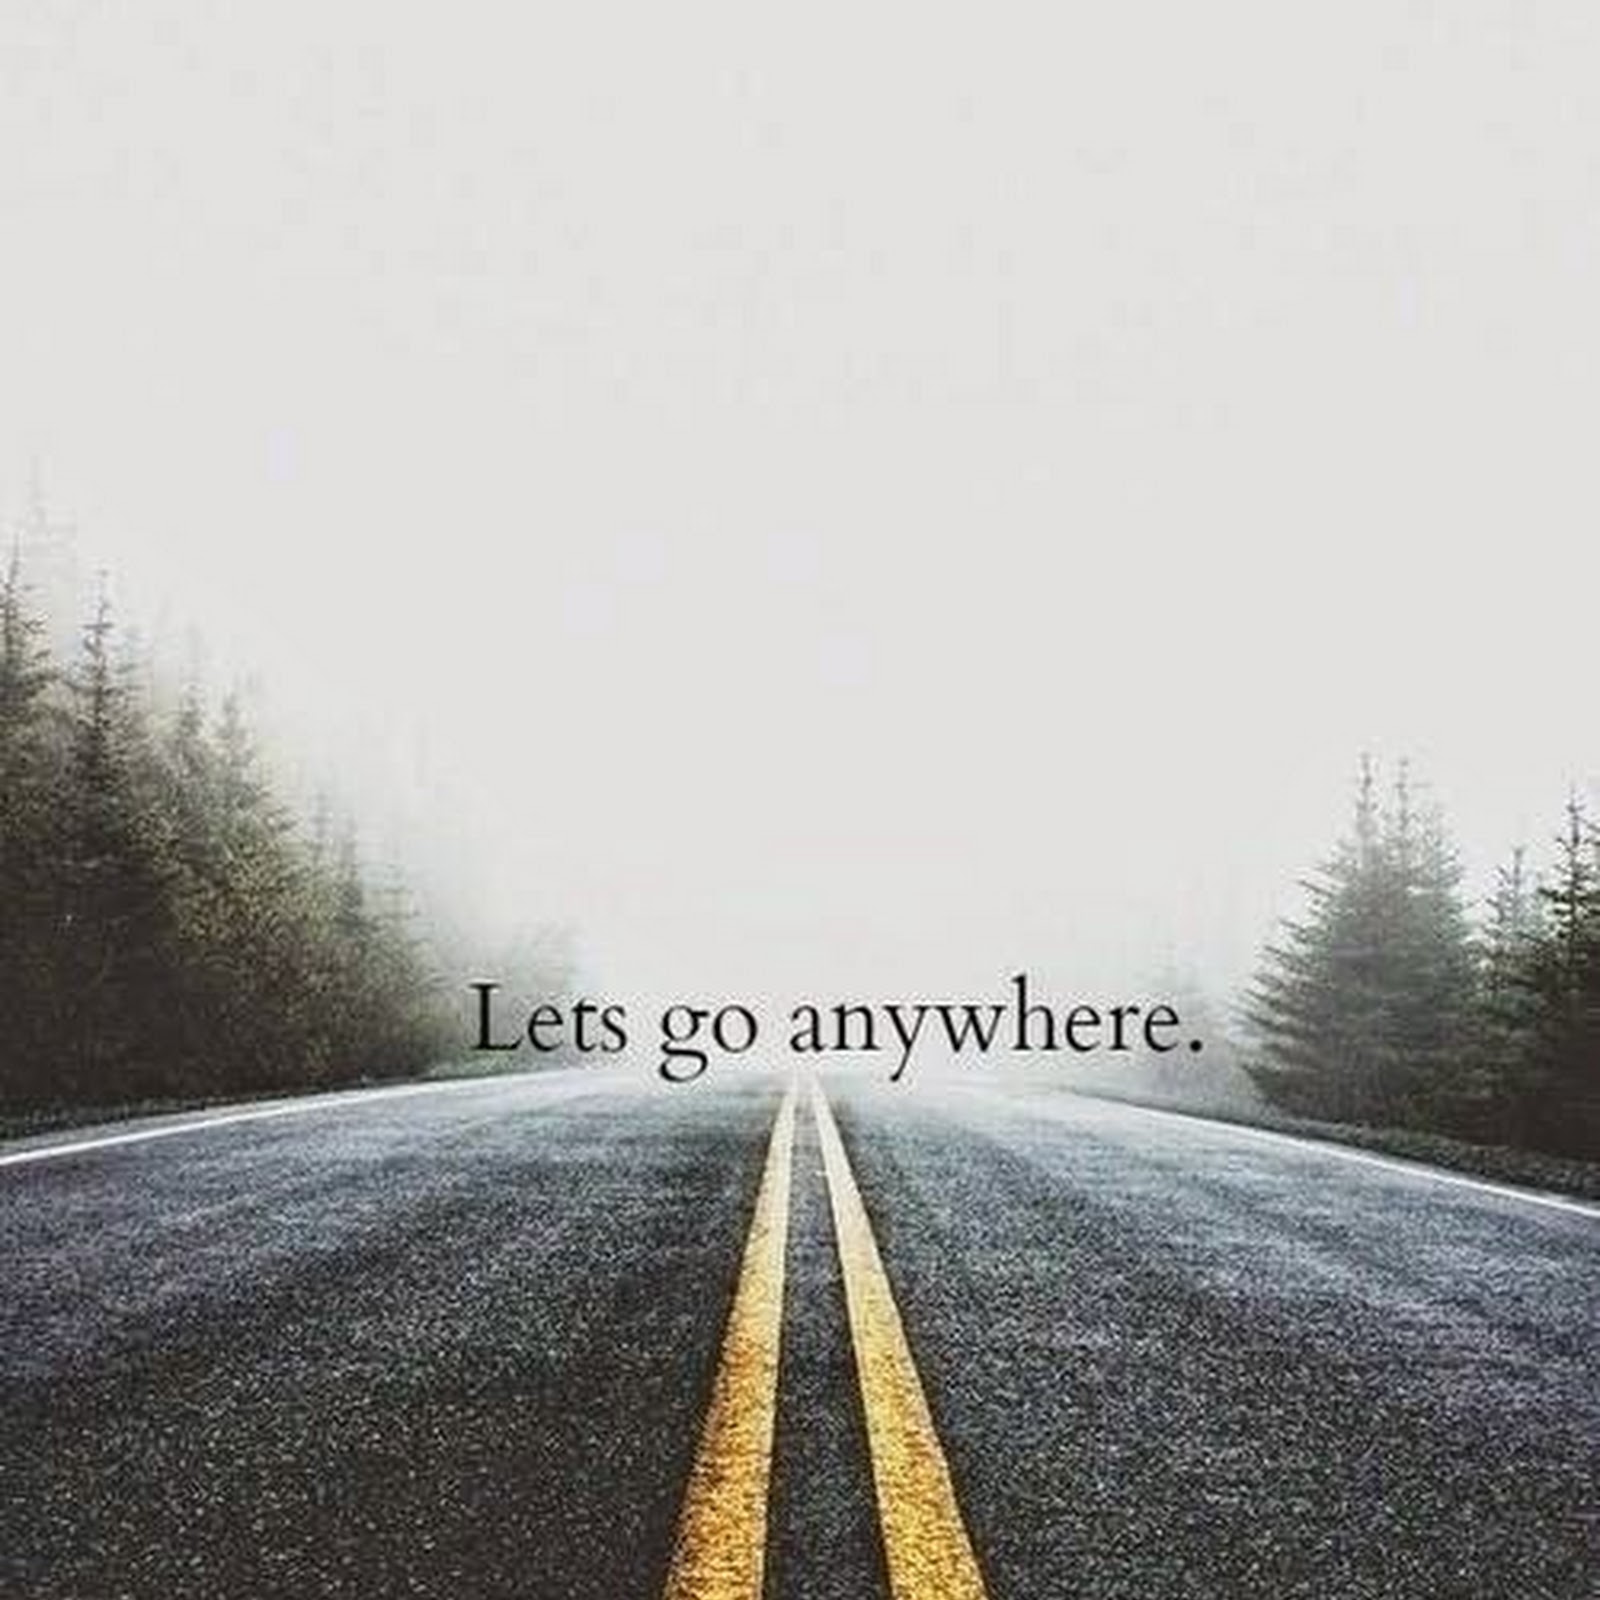 Let's go anywhere. 